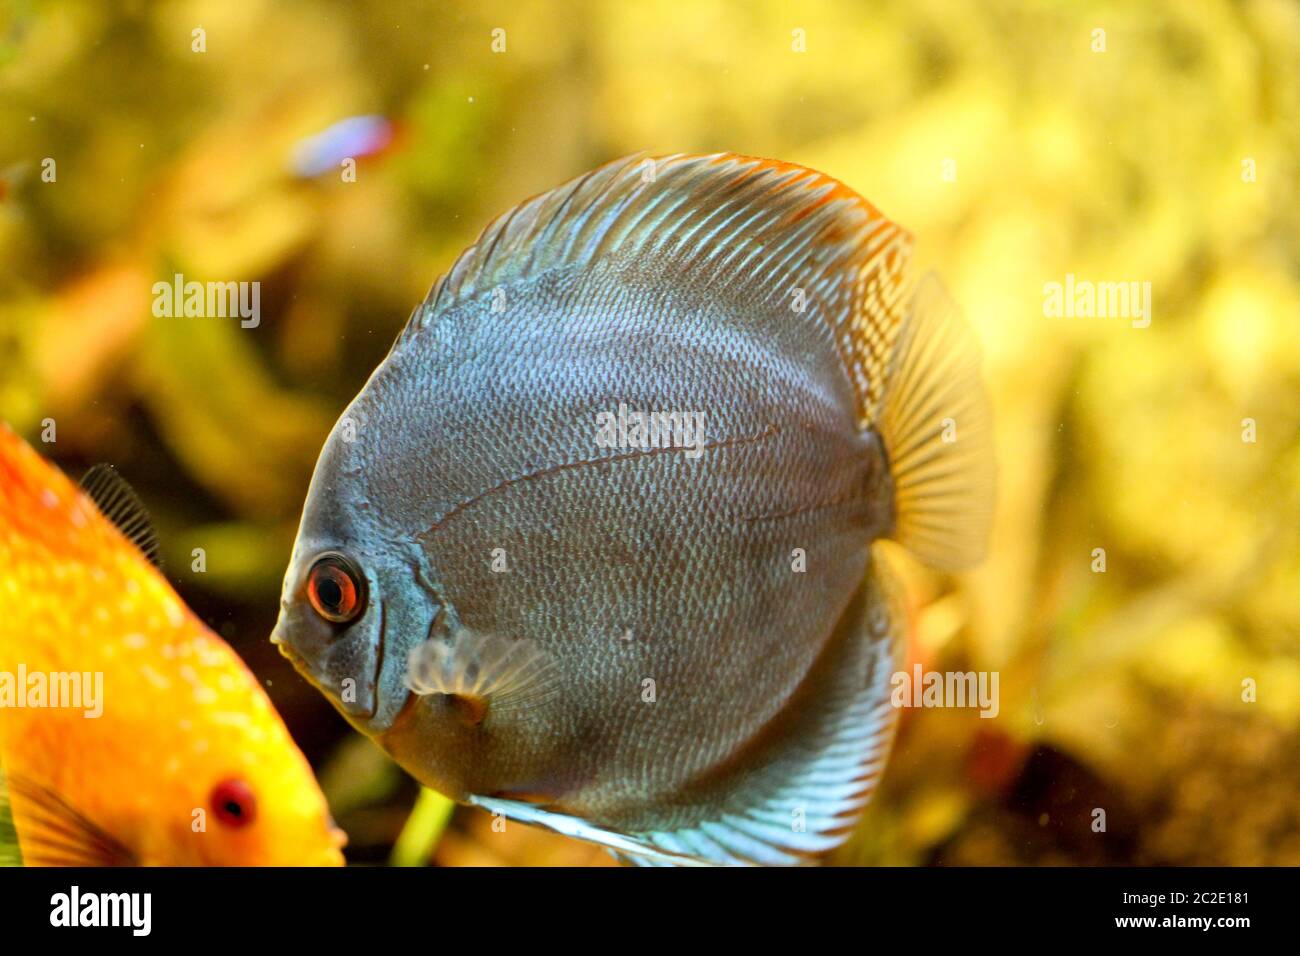 Discus fish in the aquarium. Discus are fish from the genus Symphysodon  Stock Photo - Alamy